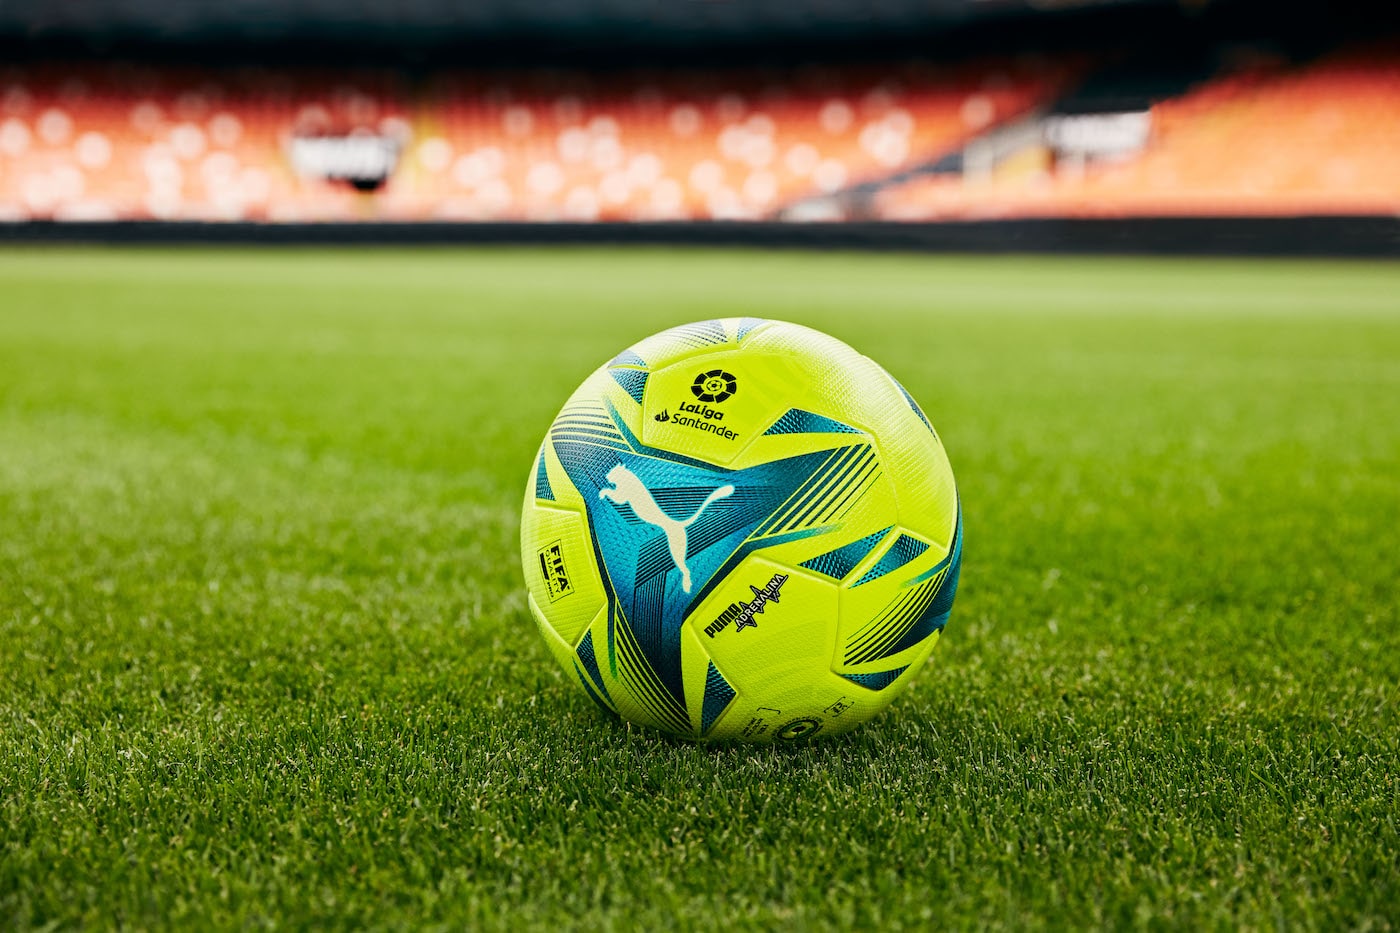 Adrenalina match ball for the 202122 laliga season 2